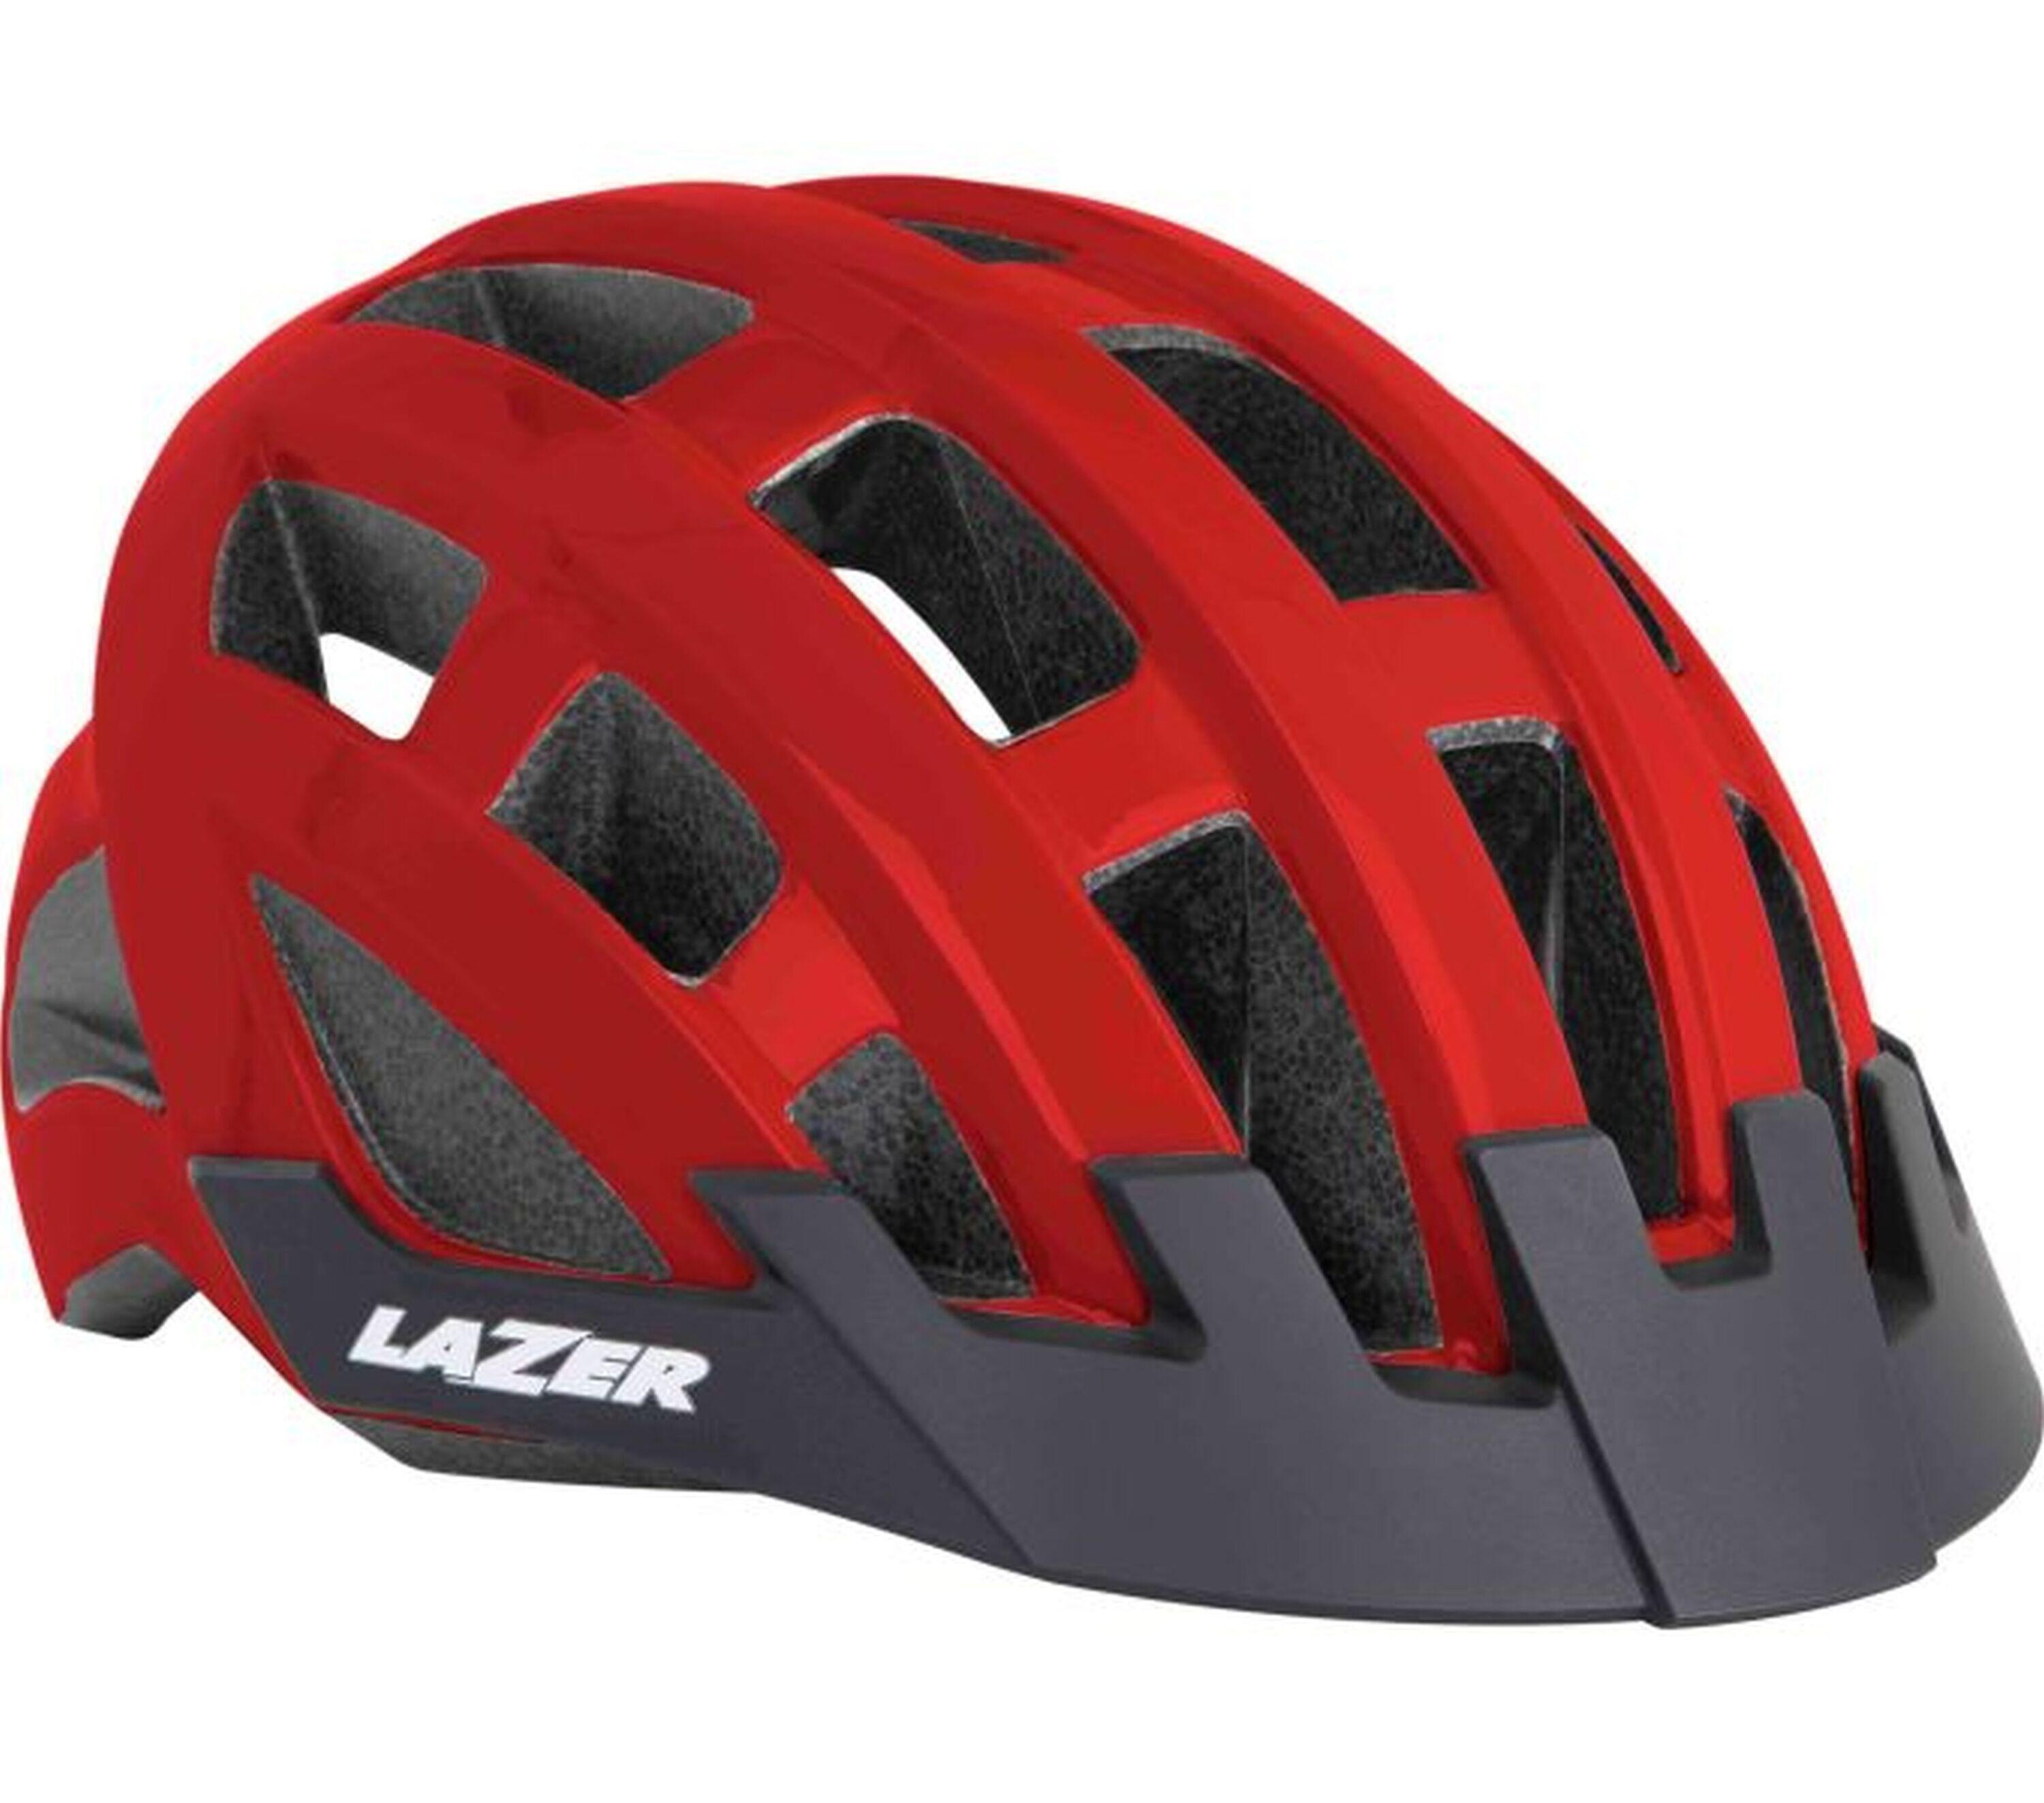 LAZER Lazer Compact Cycle Helmet Uni-Size